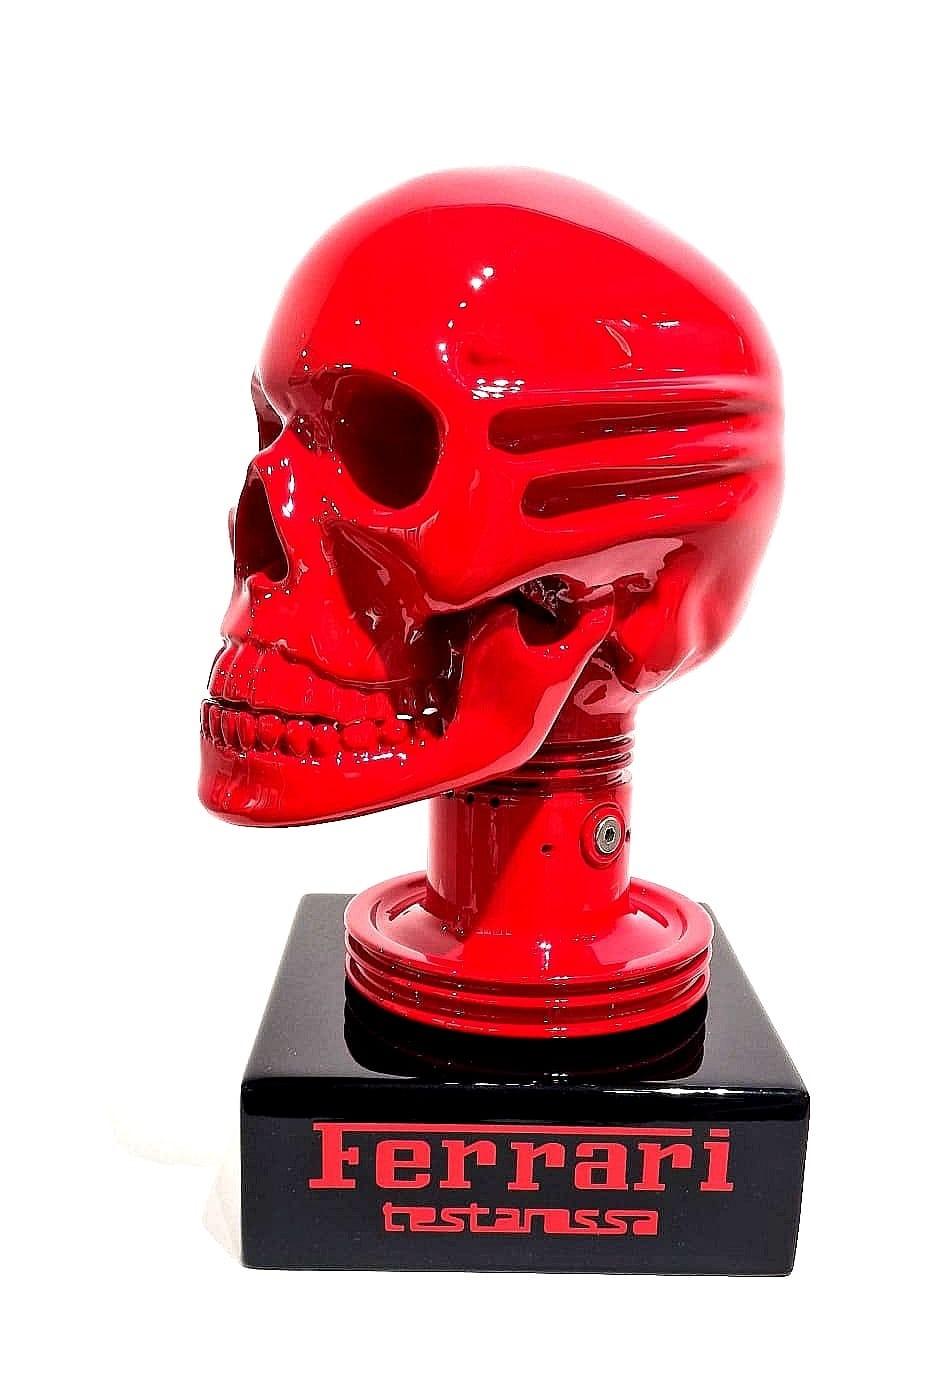 Ferrari Testarossa Skull - Sculpture by Erik Salin